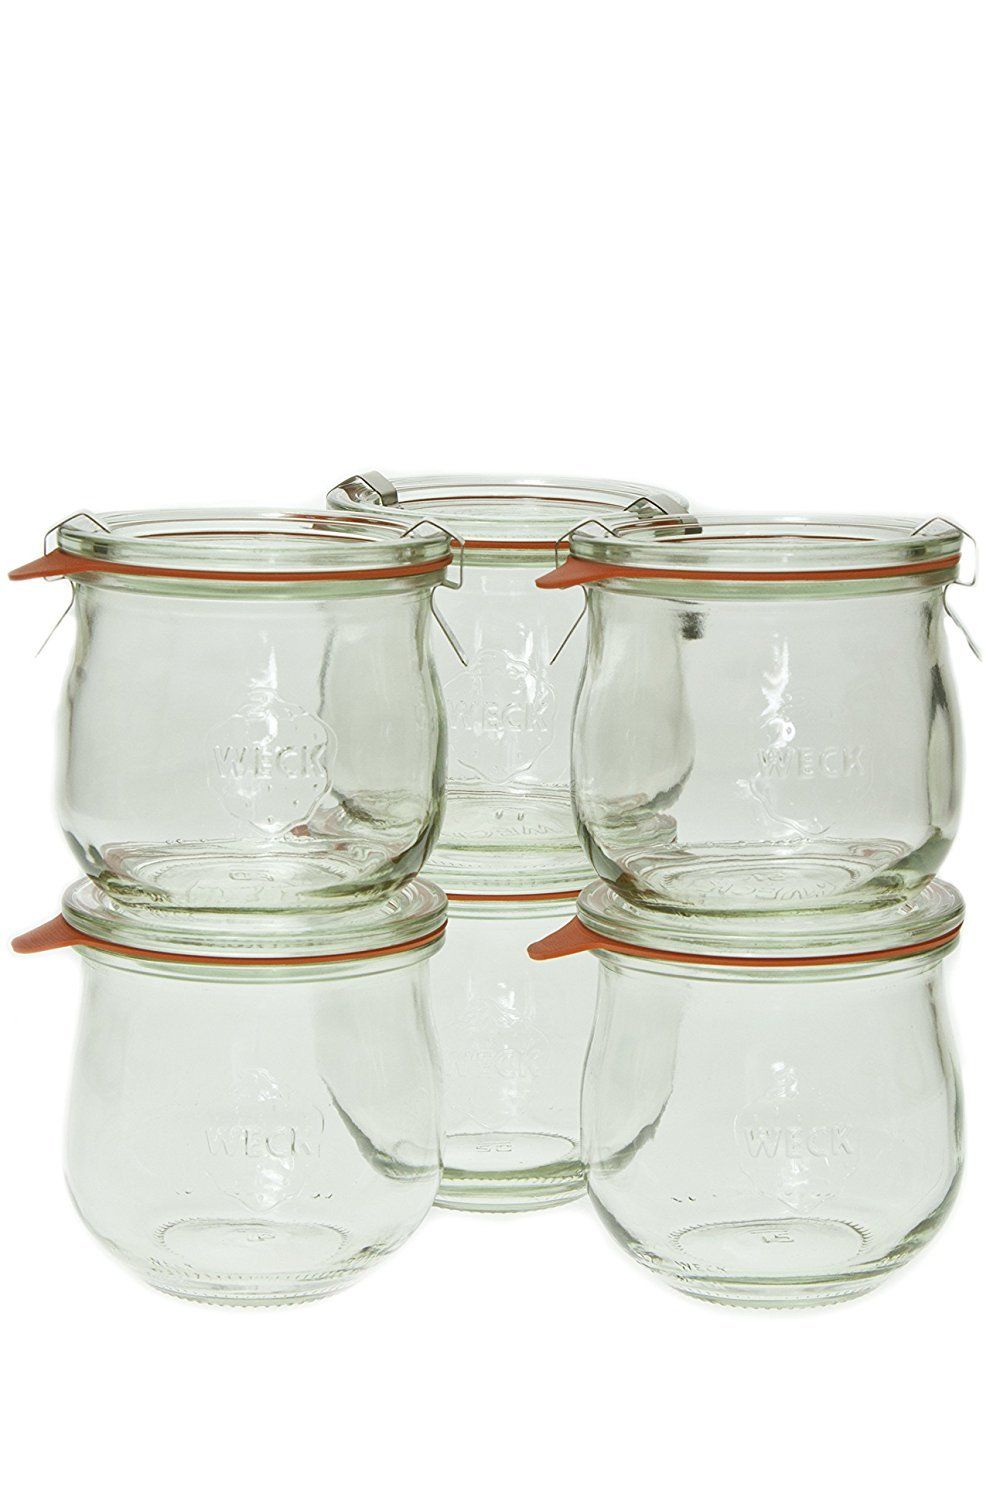 Weck 746 1/5 Liter Tulip Jar, 12.5 Oz - Set of 6 | Amazon (US)